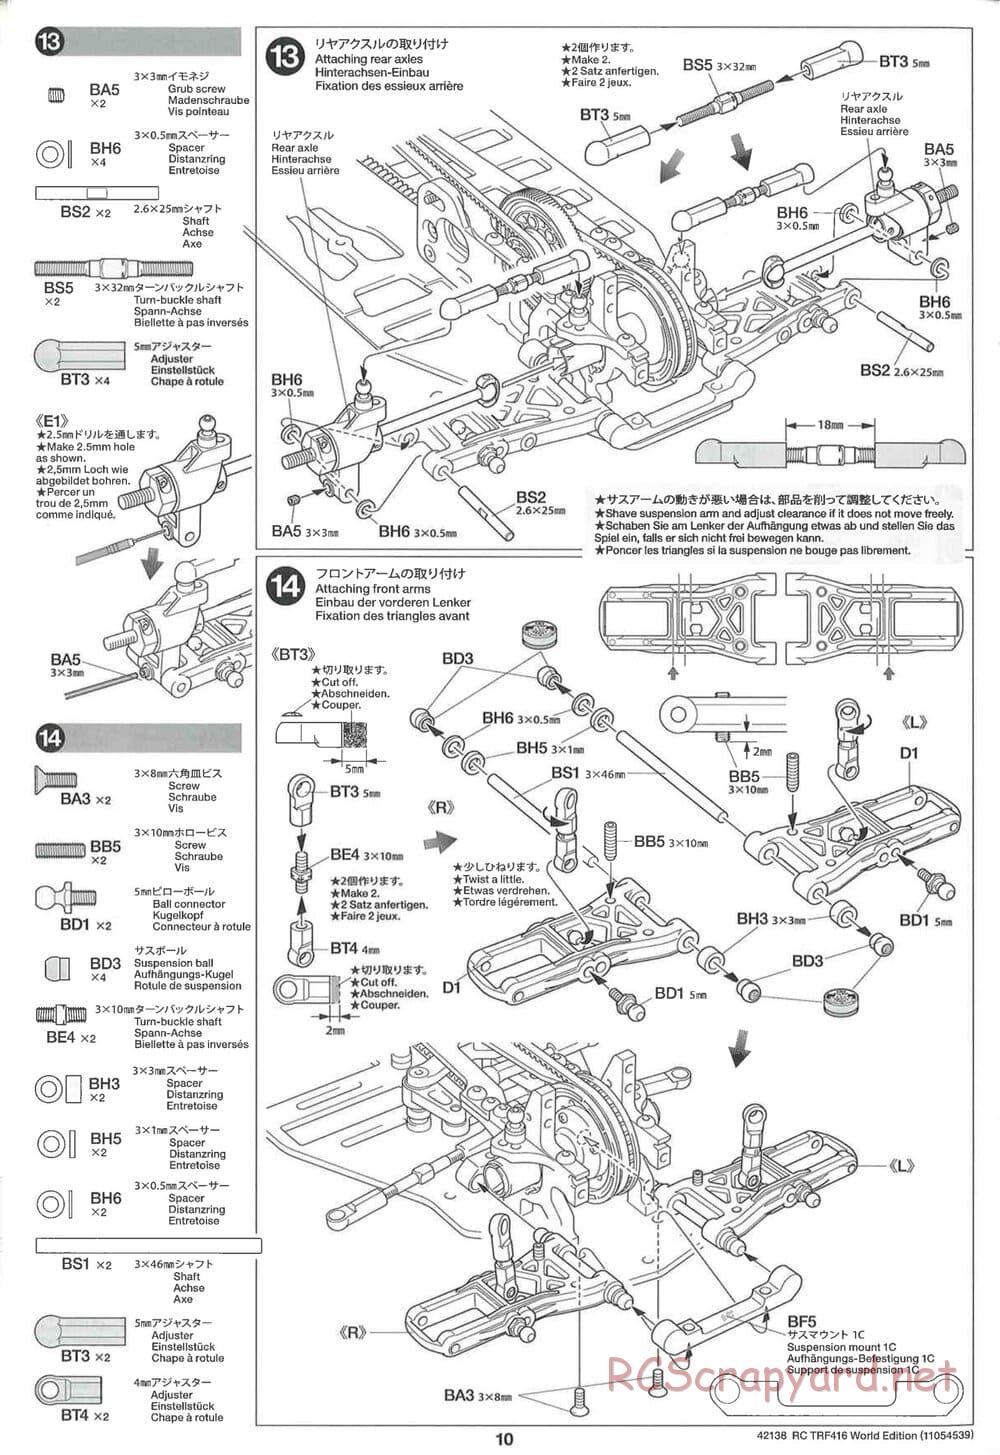 Tamiya - TRF416 World Edition Chassis - Manual - Page 10